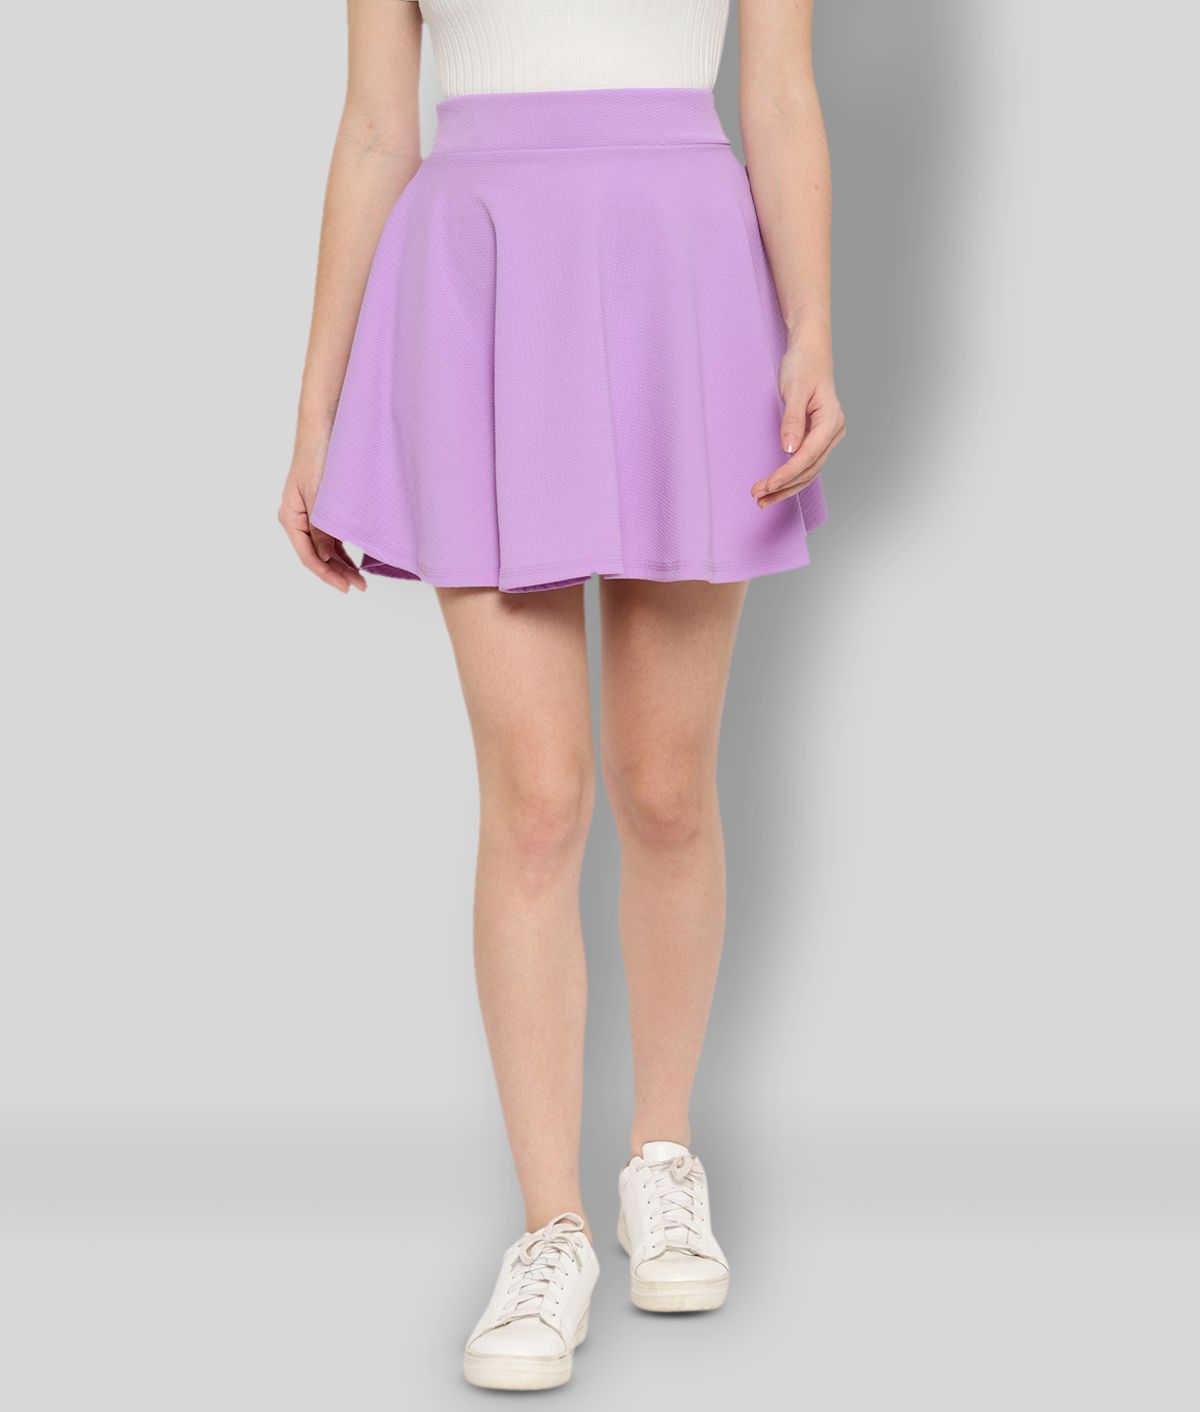 R L F - Purple Cotton Blend Women's Circle Skirt ( Pack of 1 )